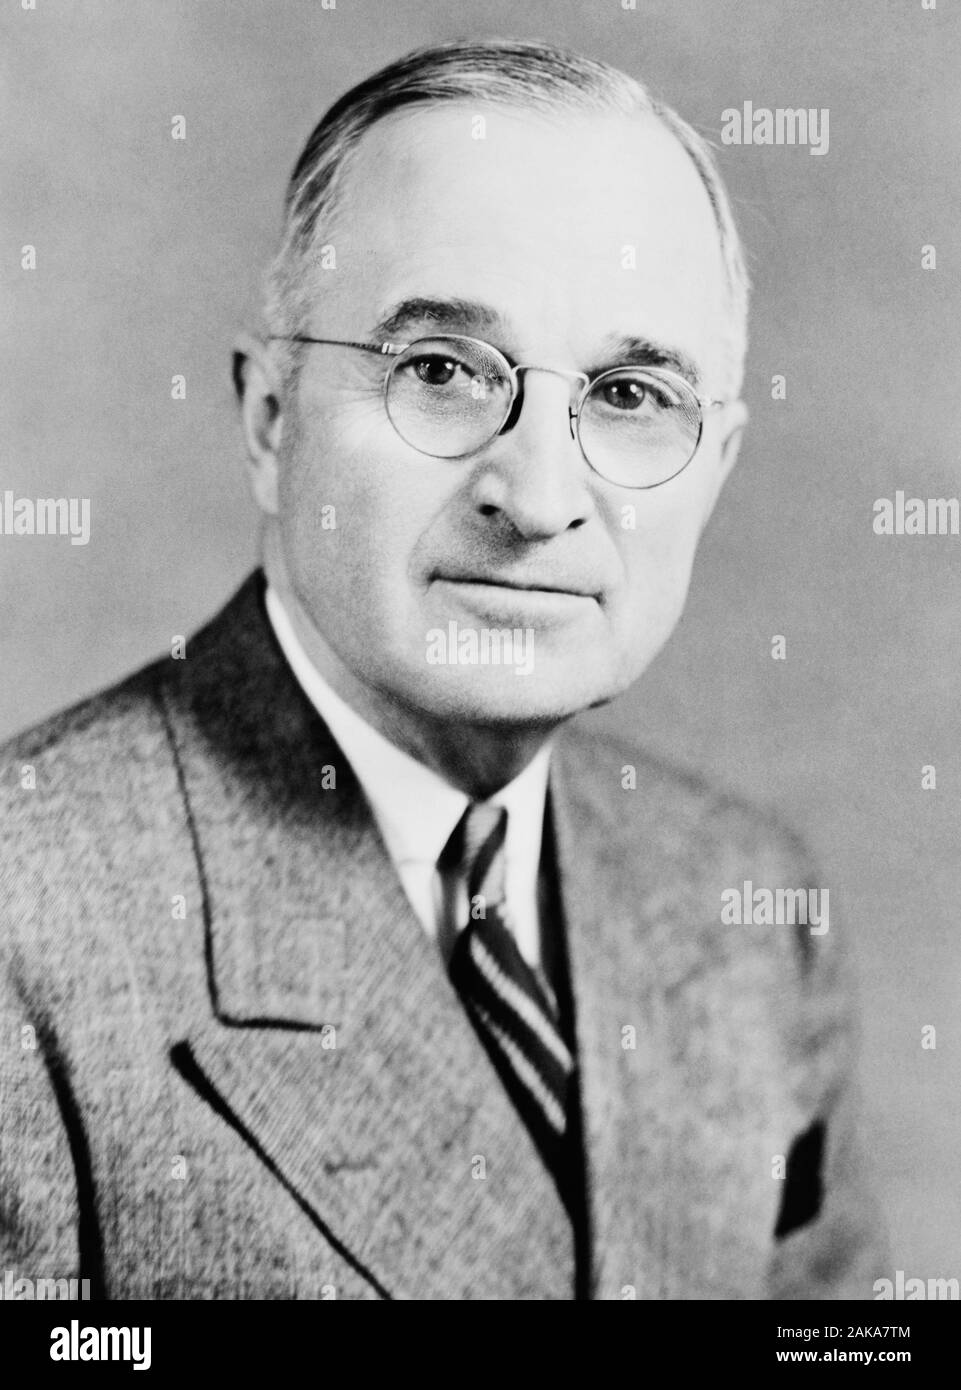 Jahrgang Porträt Foto von Harry S Truman (1884-1972) - Der 33. US-Präsident (1945 - 1953). Foto ca. 1945 von edmonston Studio. Stockfoto